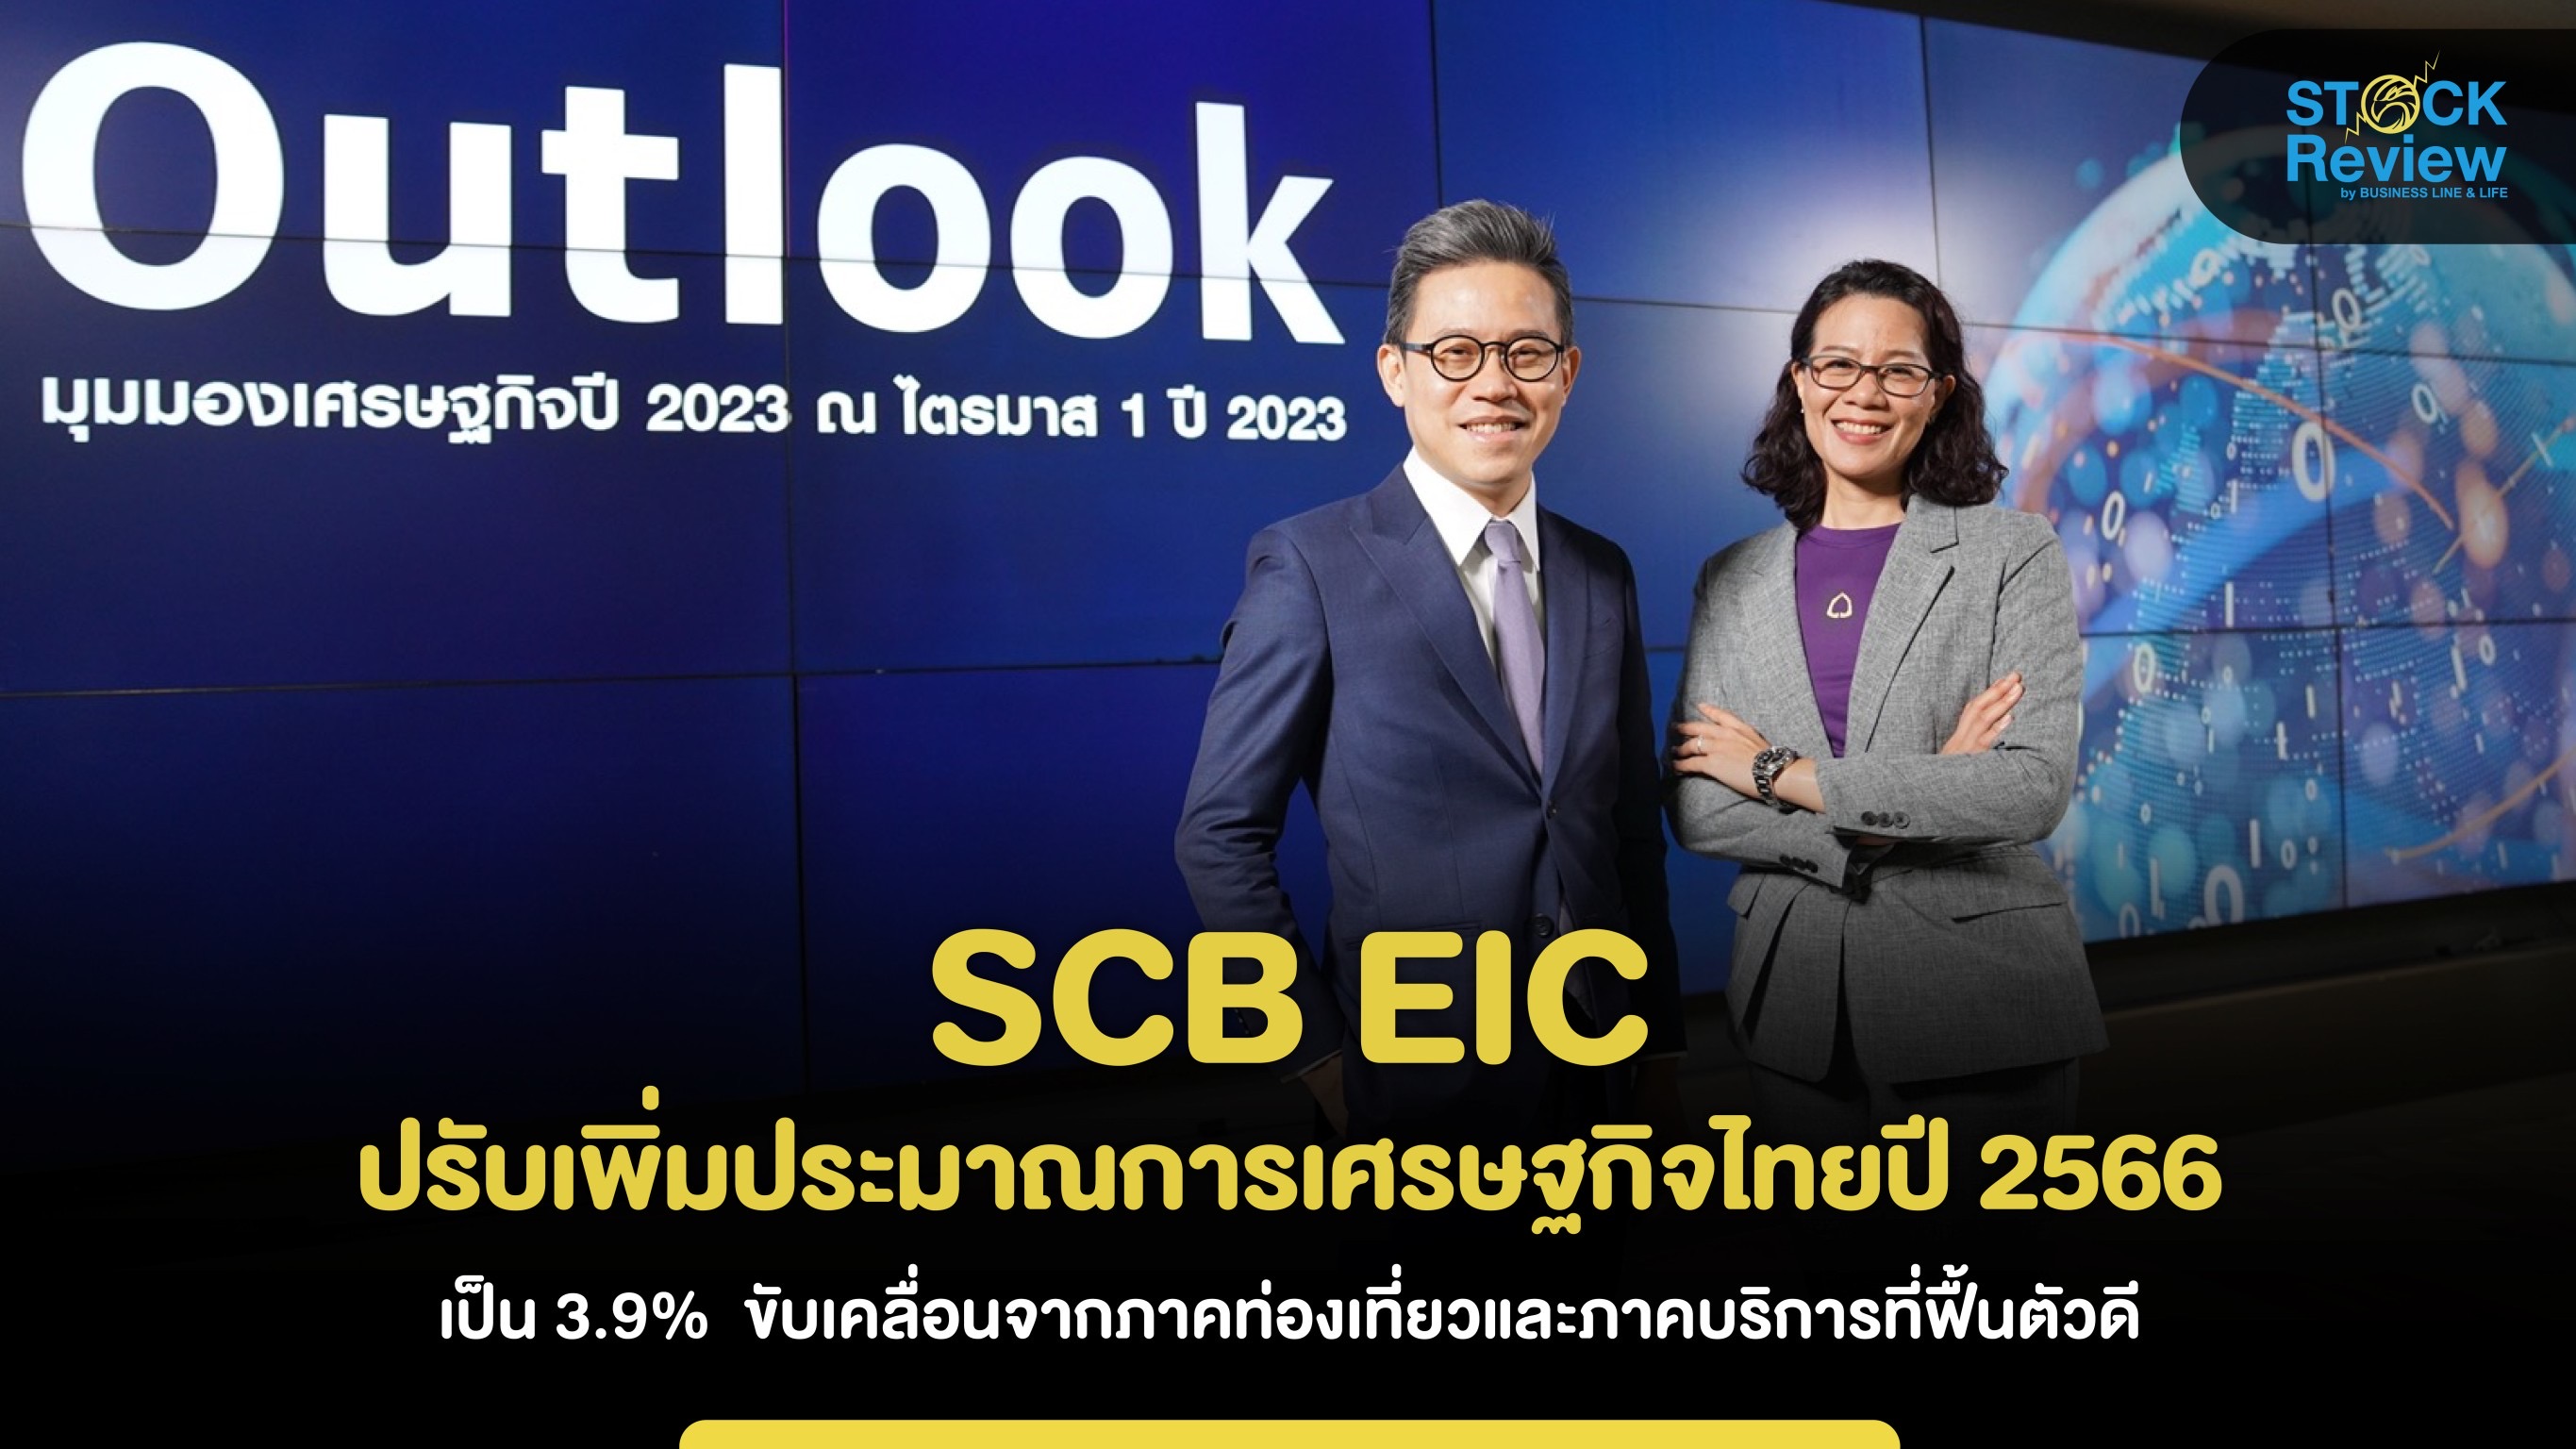 SCB EIC ปรับเพิ่ม GDP เป็น 3.9% รับอานิสงส์ท่องเที่ยวฟื้นตัว